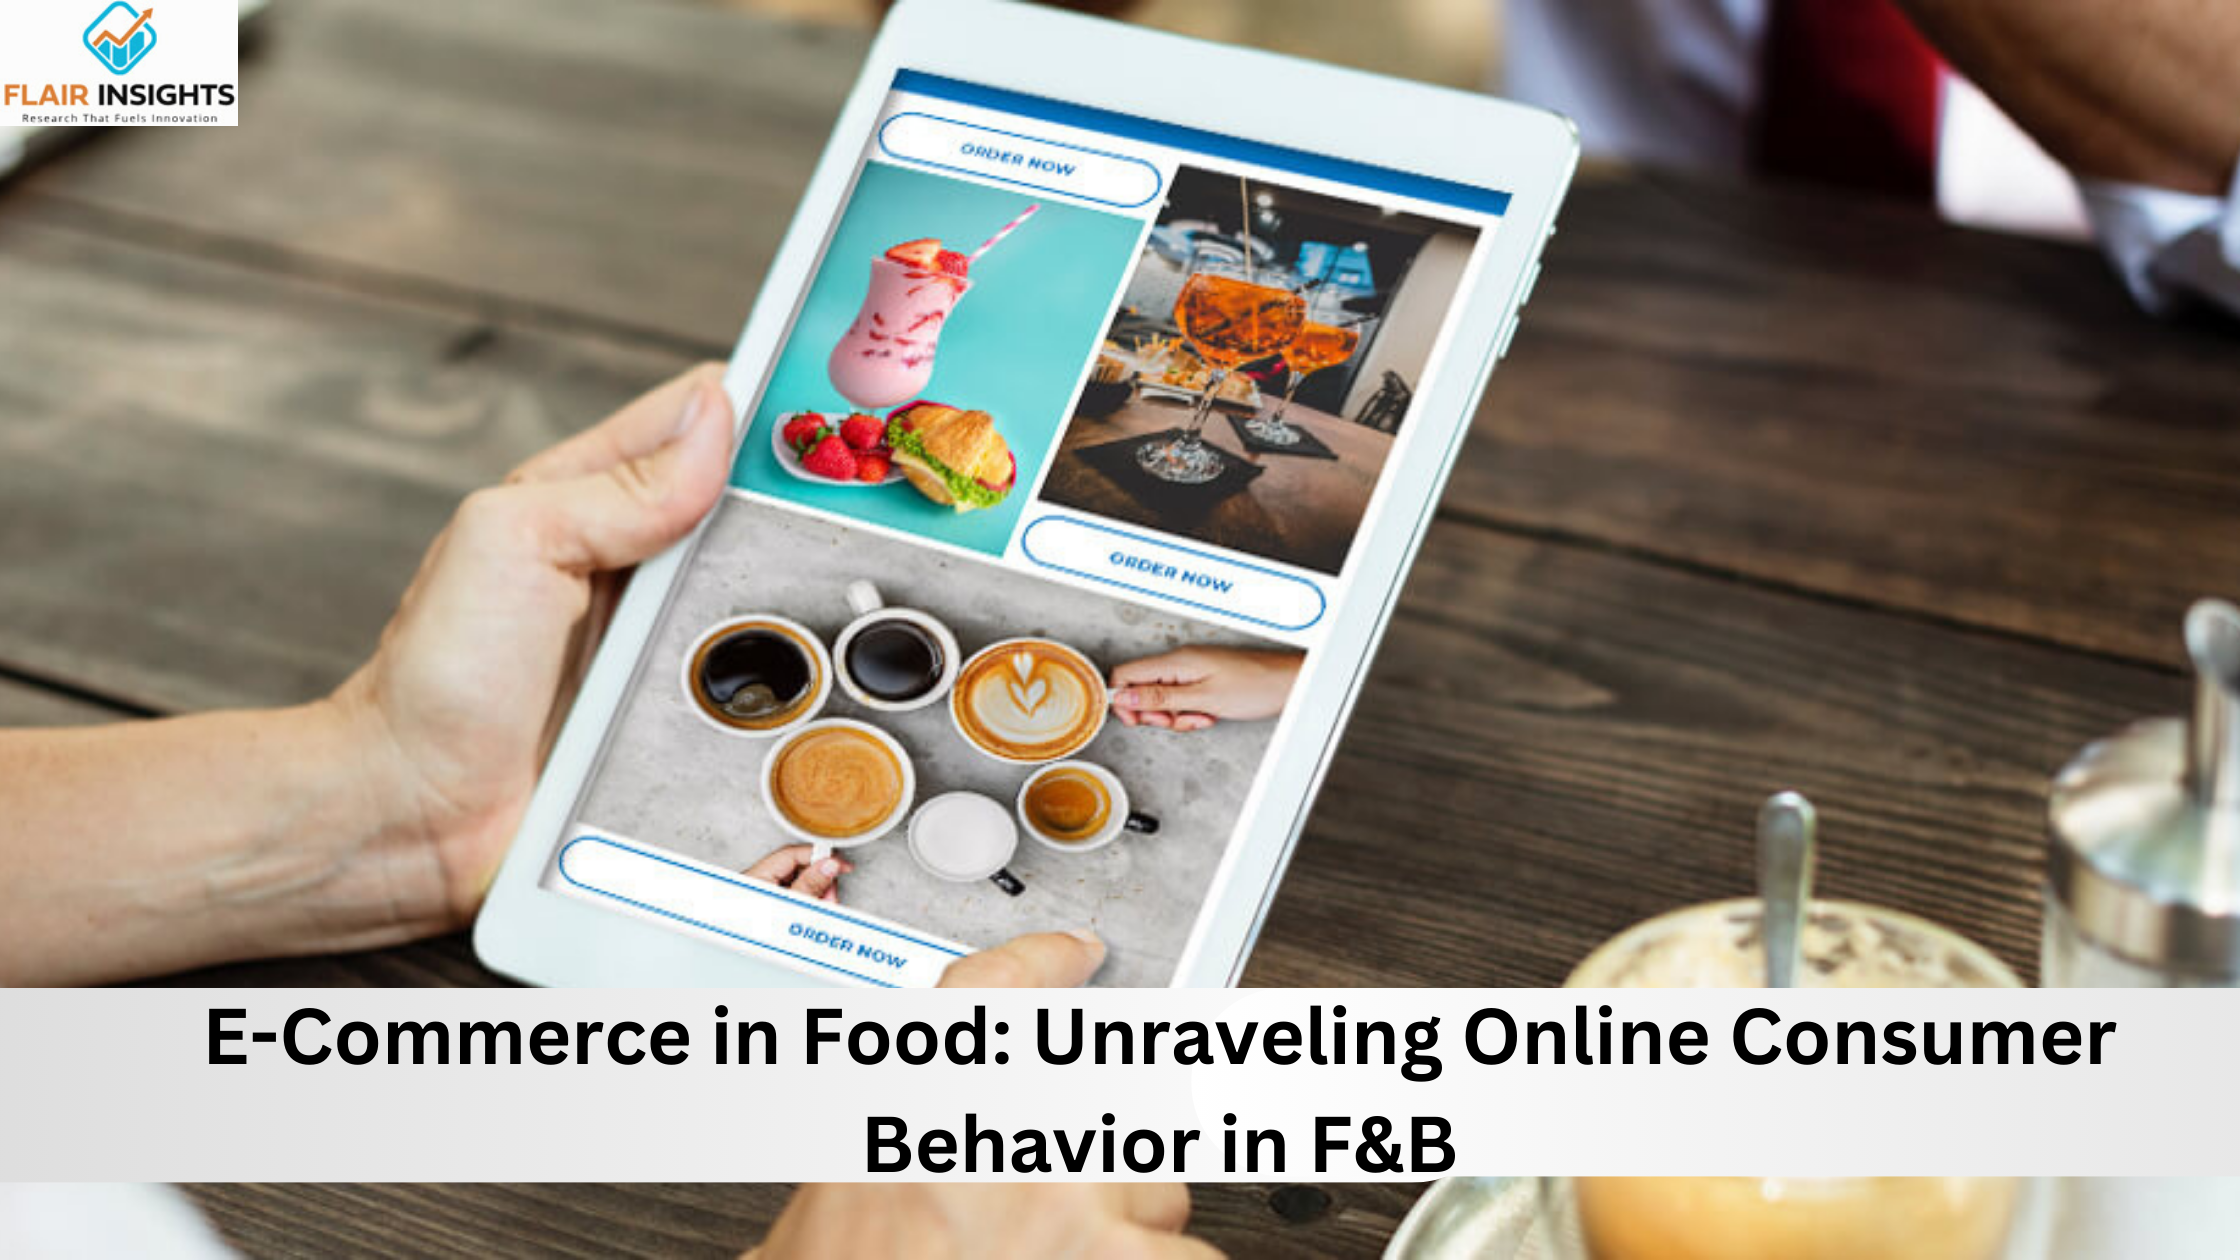 Unraveling Online Consumer Behavior in F&B